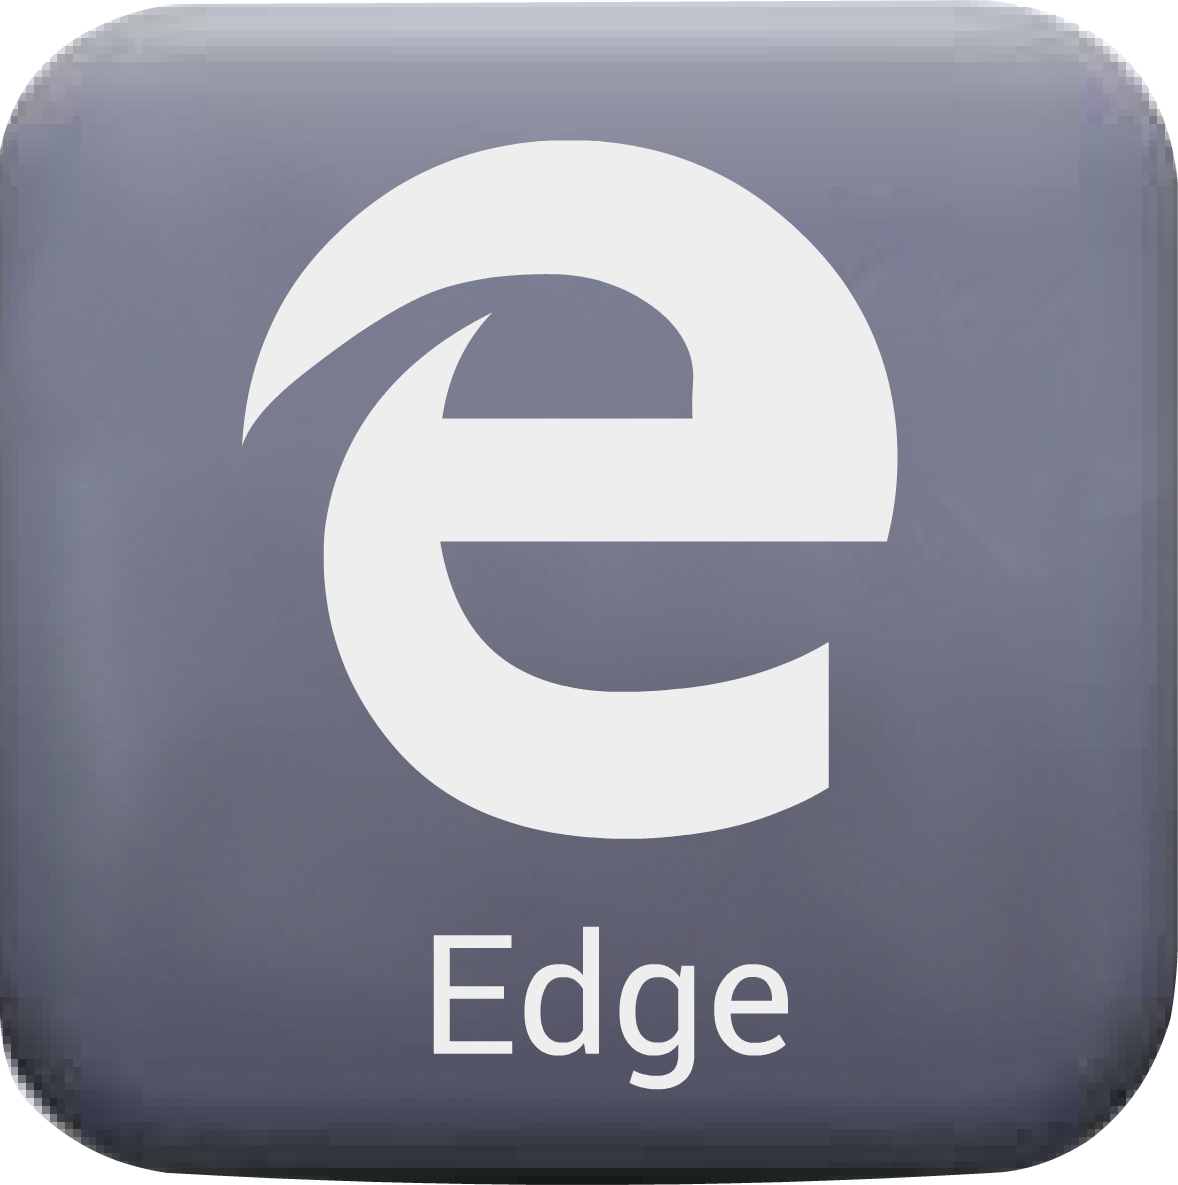 Edge application